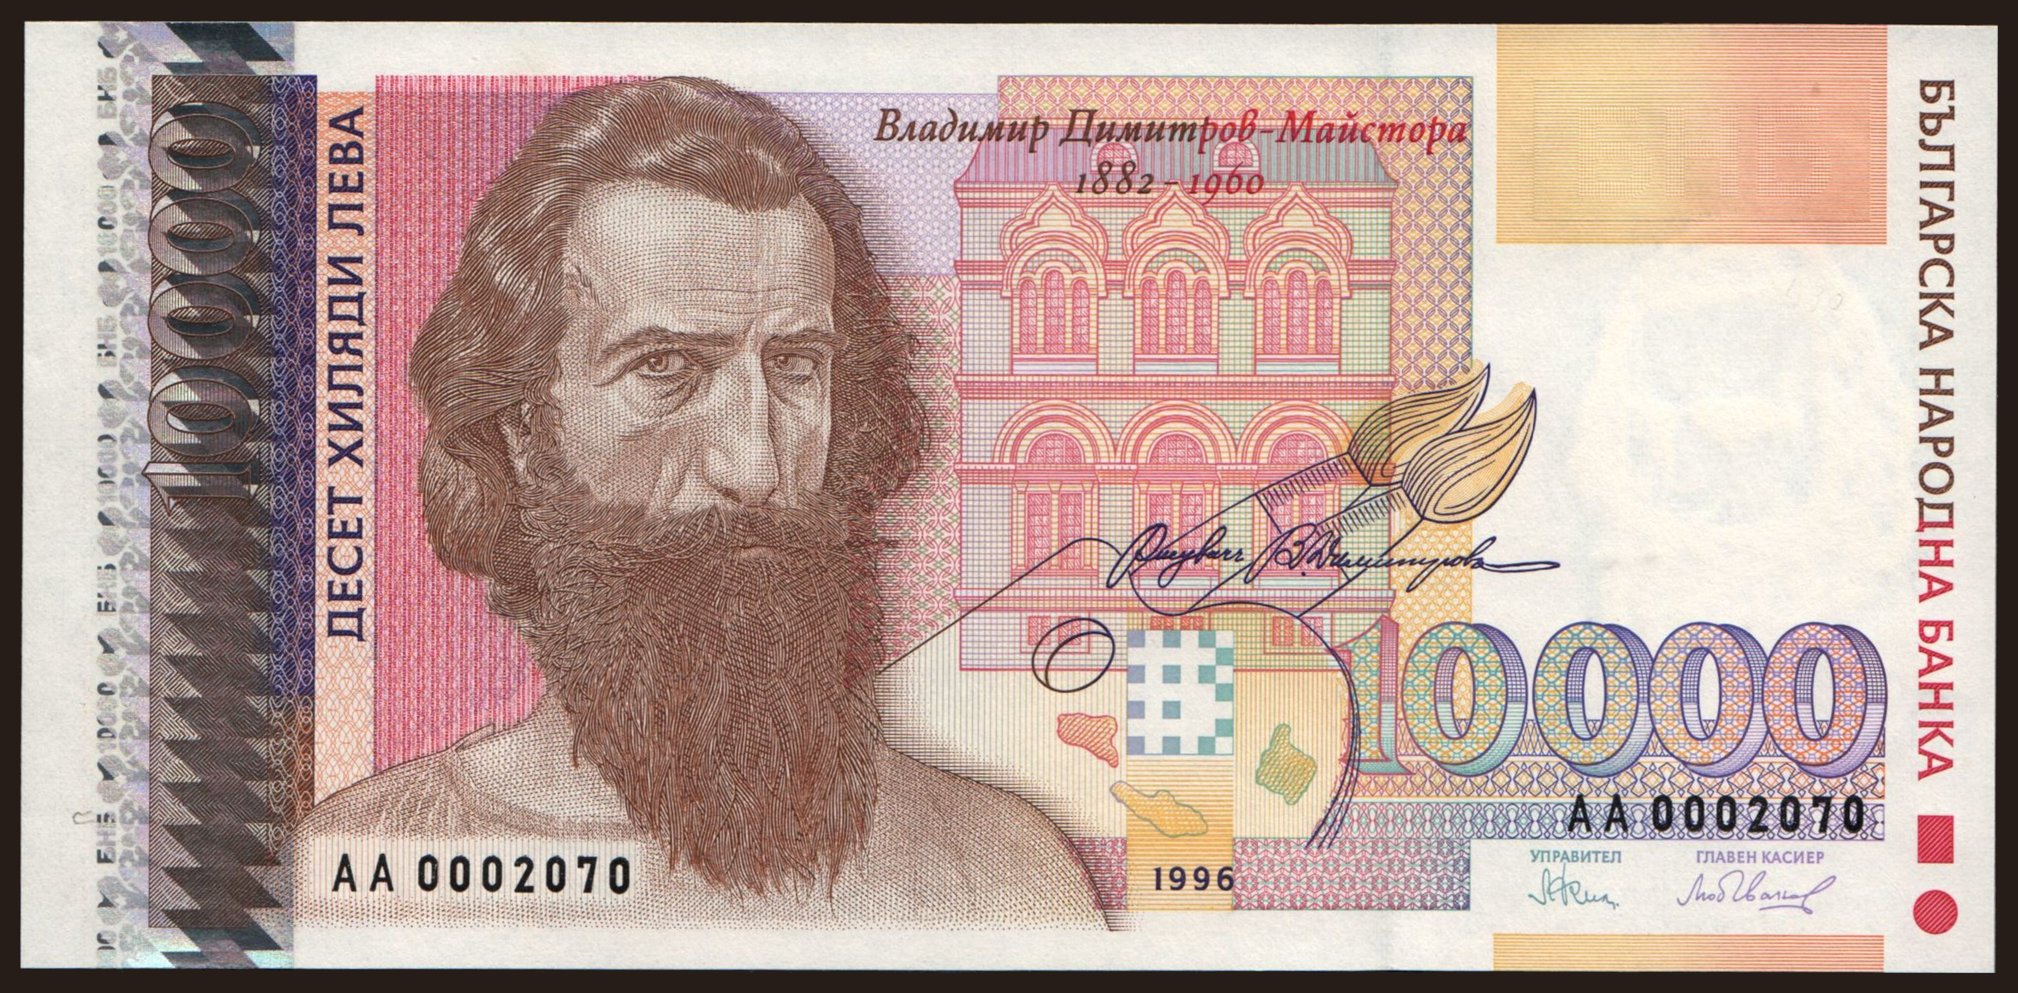 10.000 leva, 1996